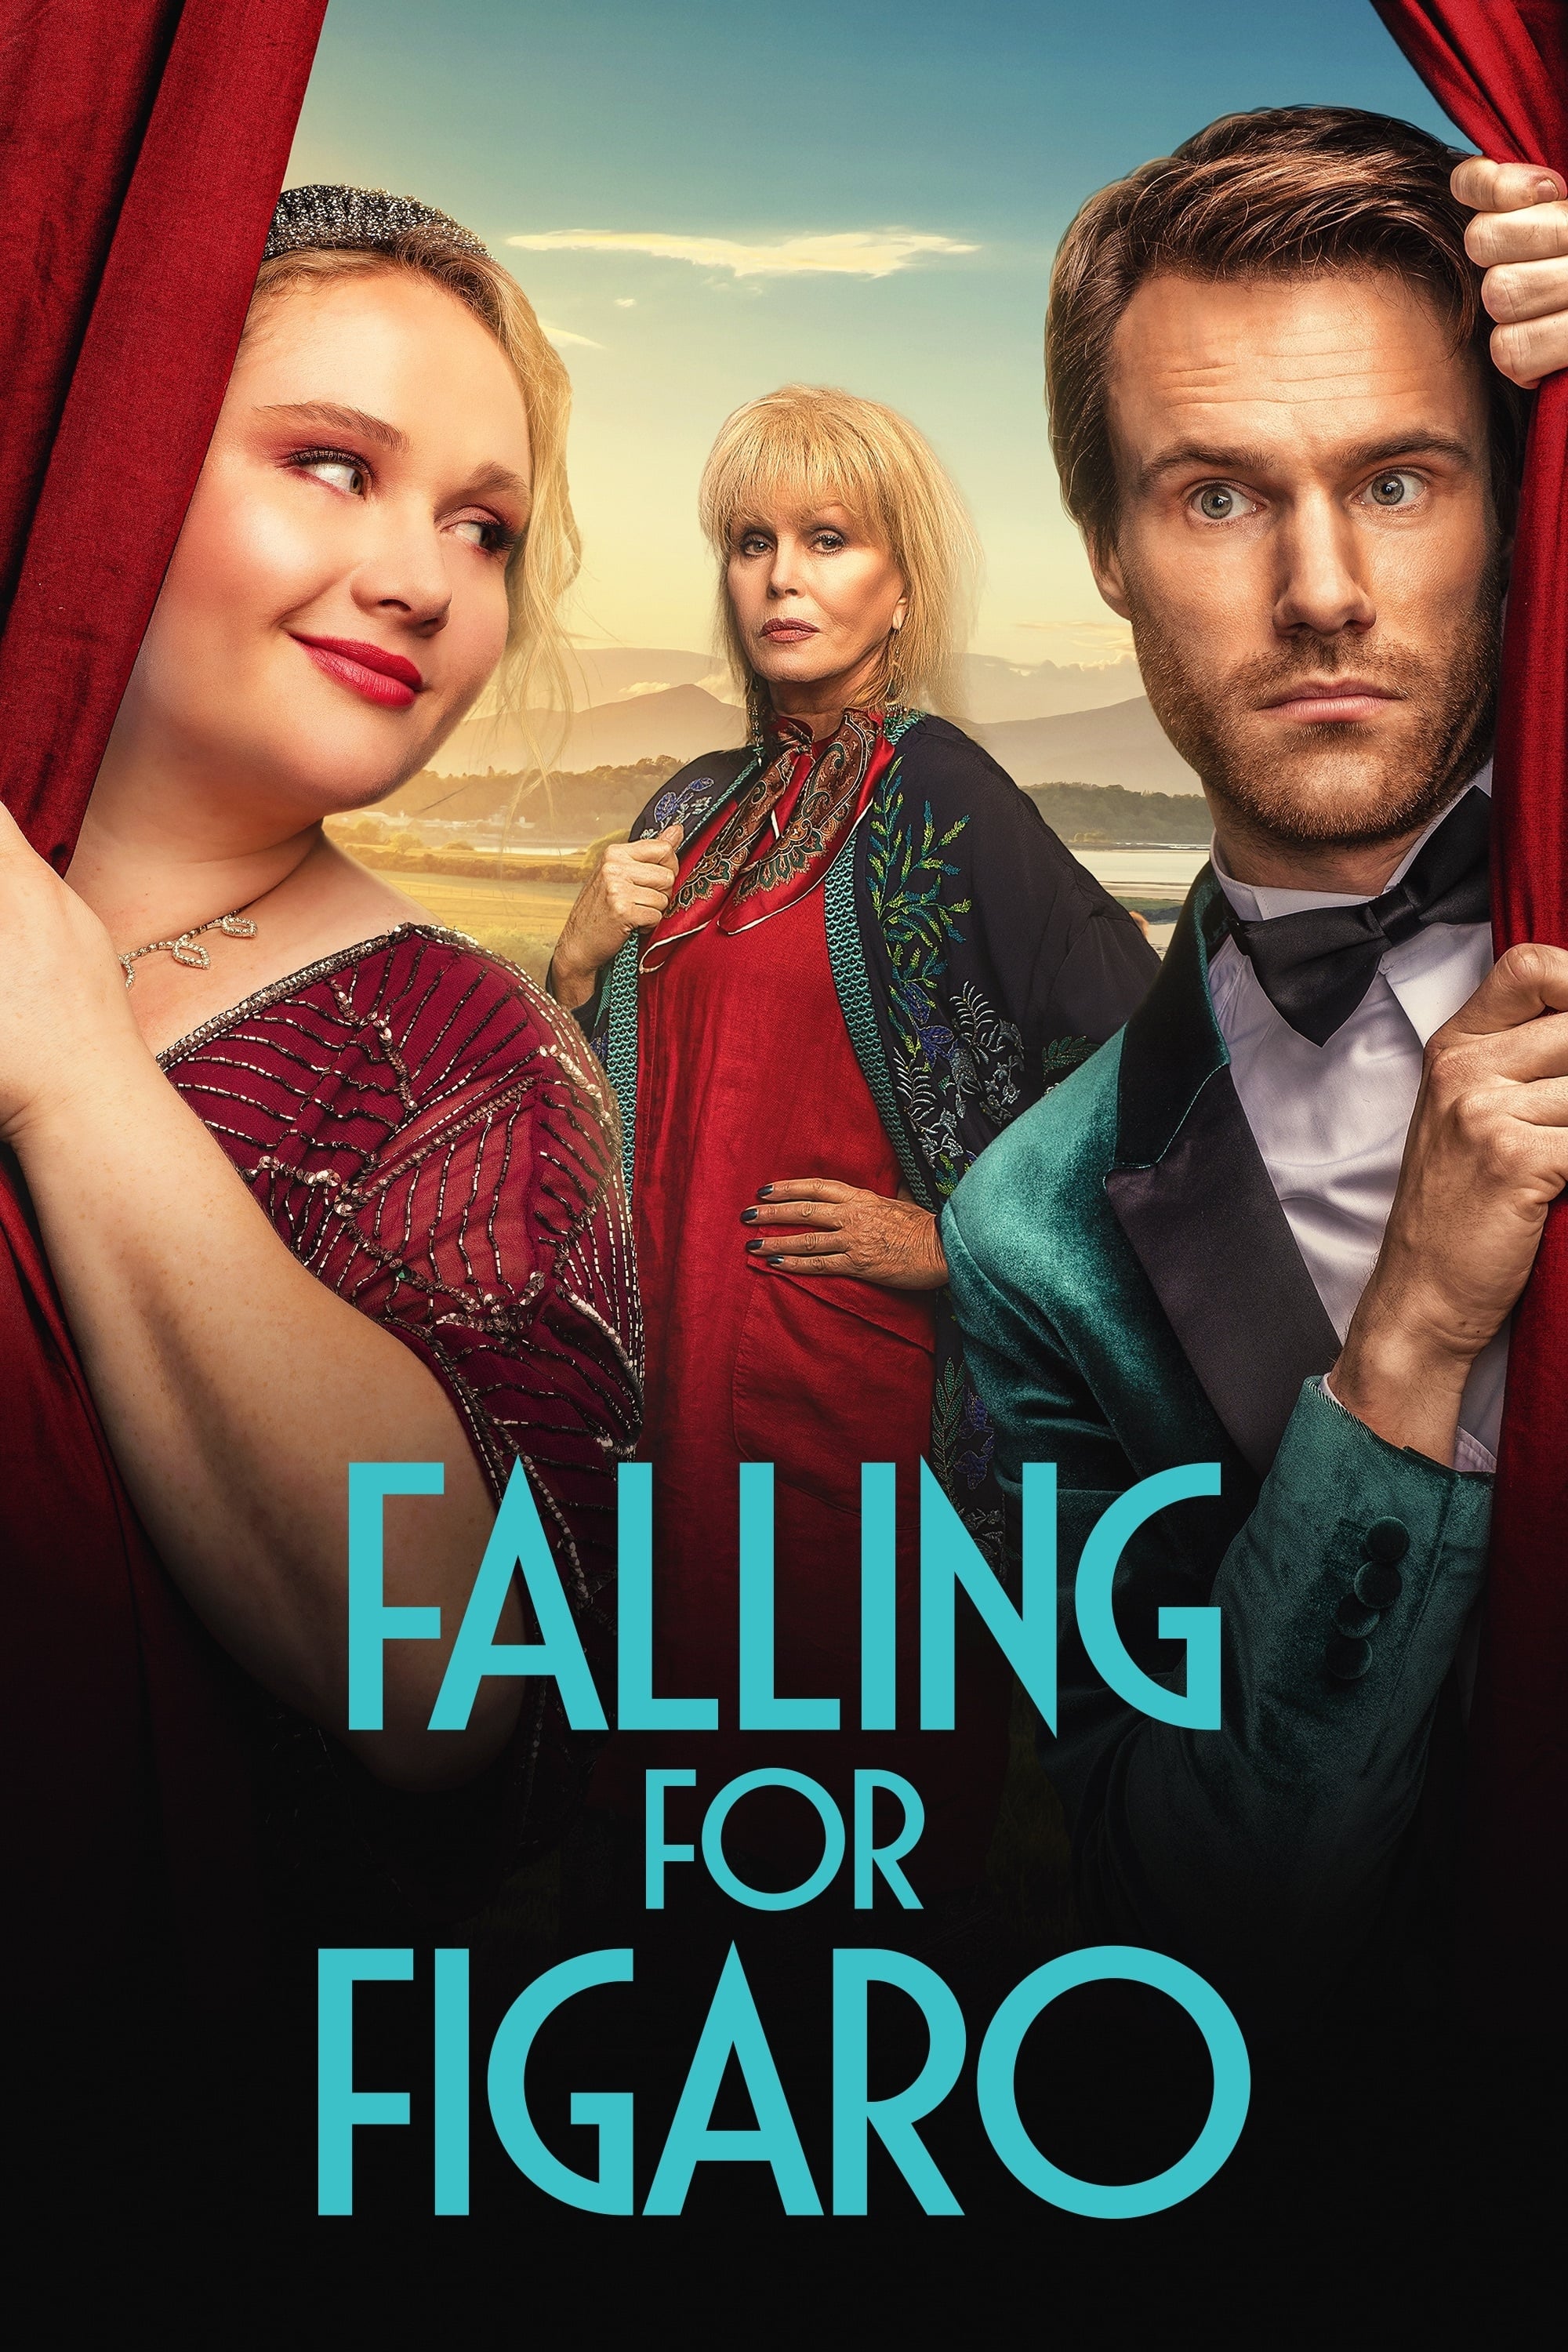 Falling for Figaro Cinema Release